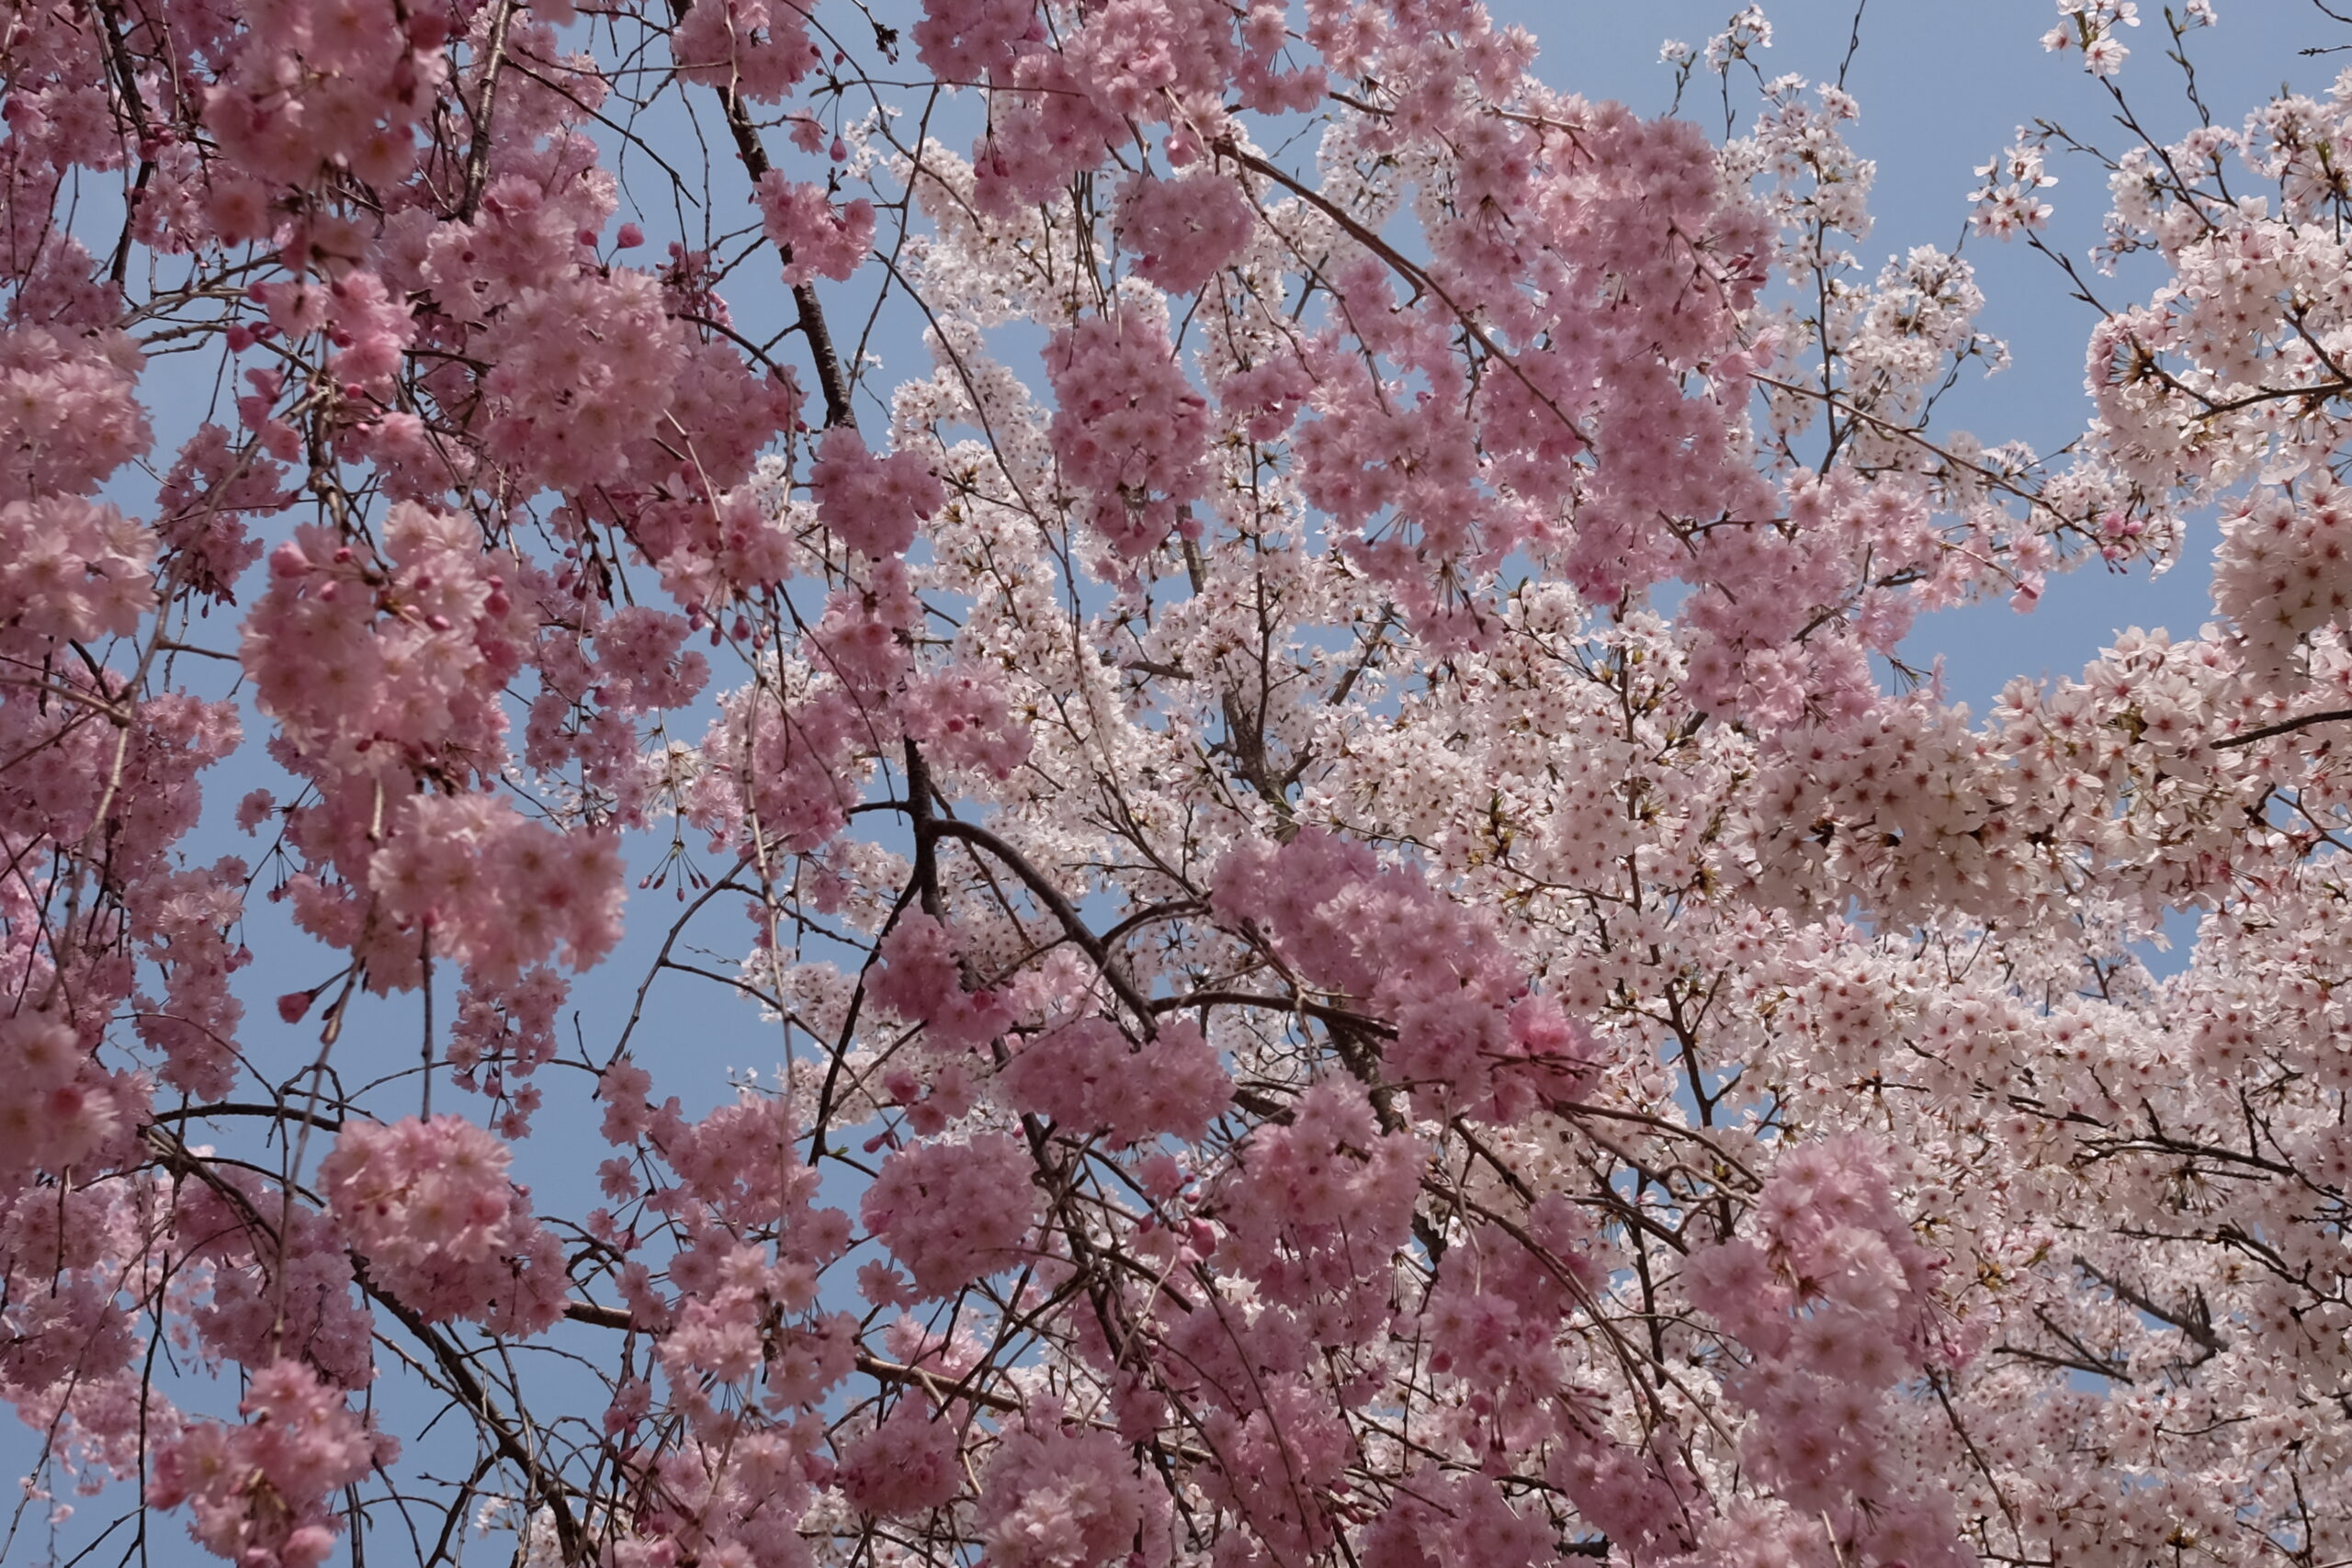 The Spring Sunlight, and Sakura